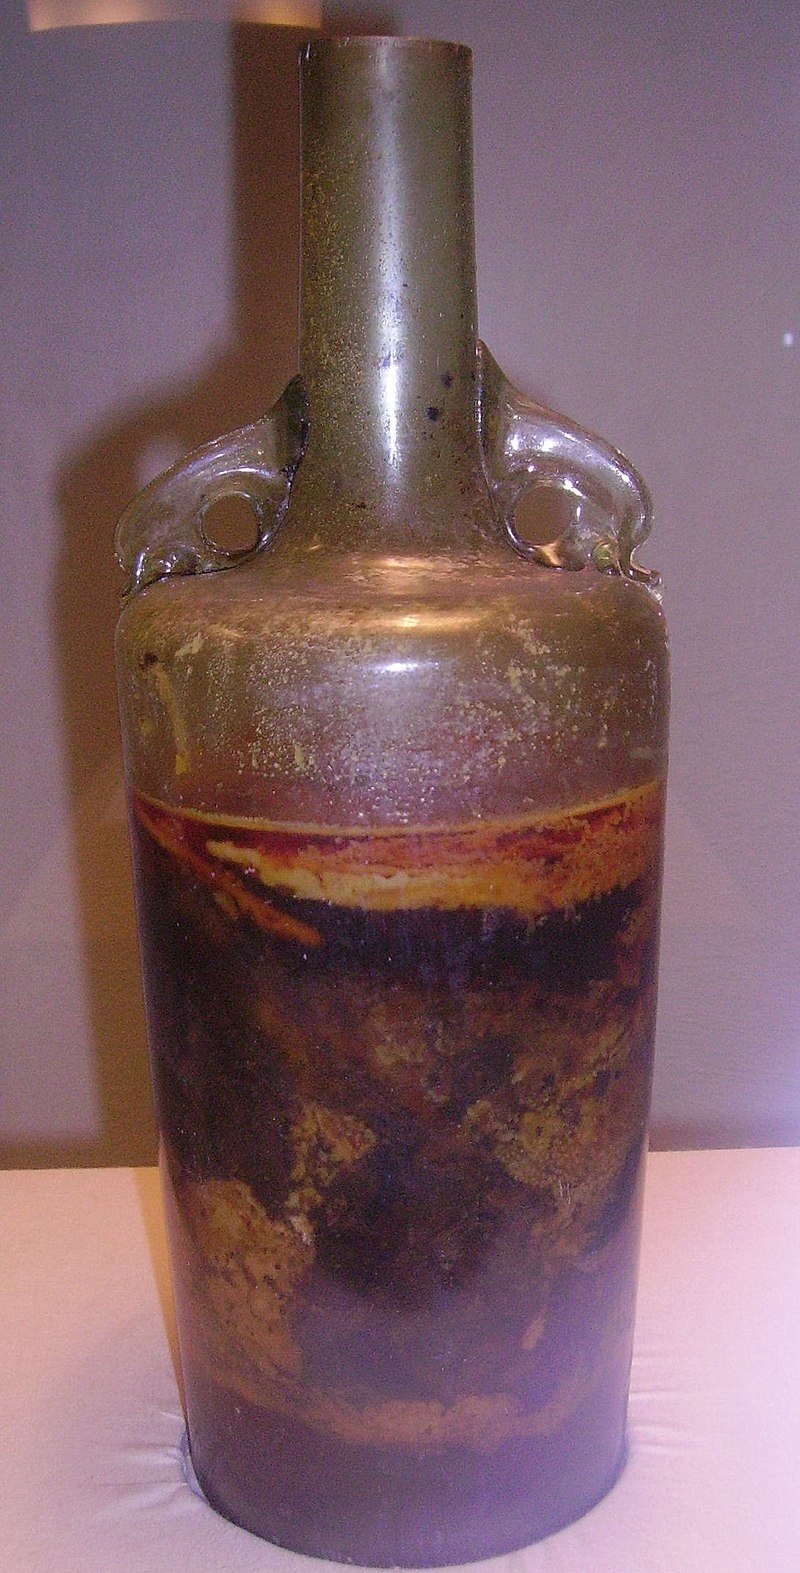 A wine bottle containing a murky, motley liquid